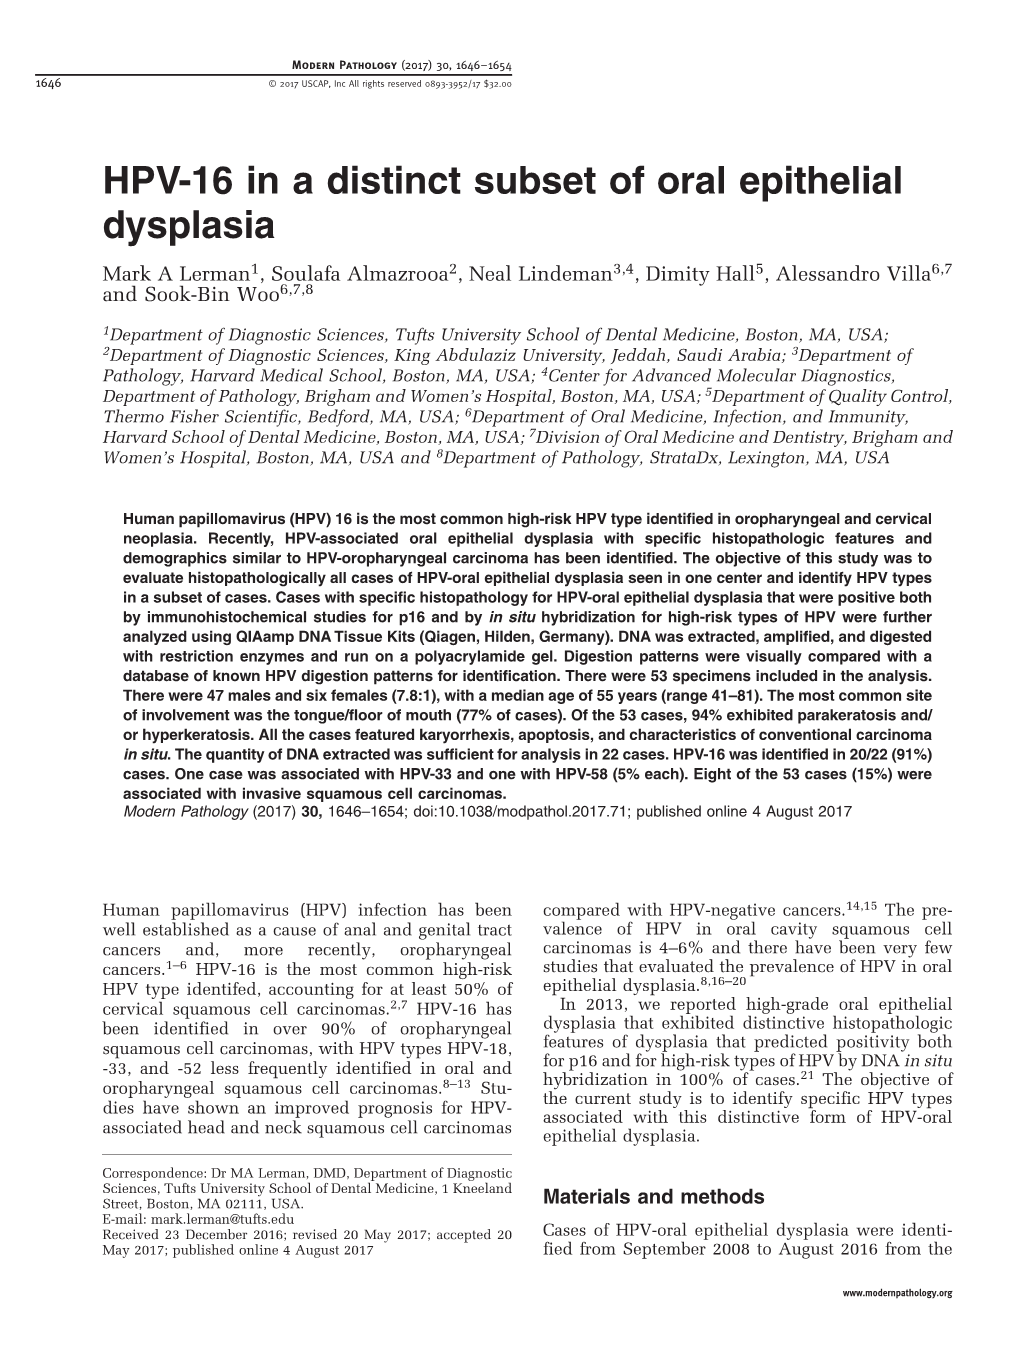 HPV-16 in a Distinct Subset of Oral Epithelial Dysplasia Mark a Lerman1, Soulafa Almazrooa2, Neal Lindeman3,4, Dimity Hall5, Alessandro Villa6,7 and Sook-Bin Woo6,7,8